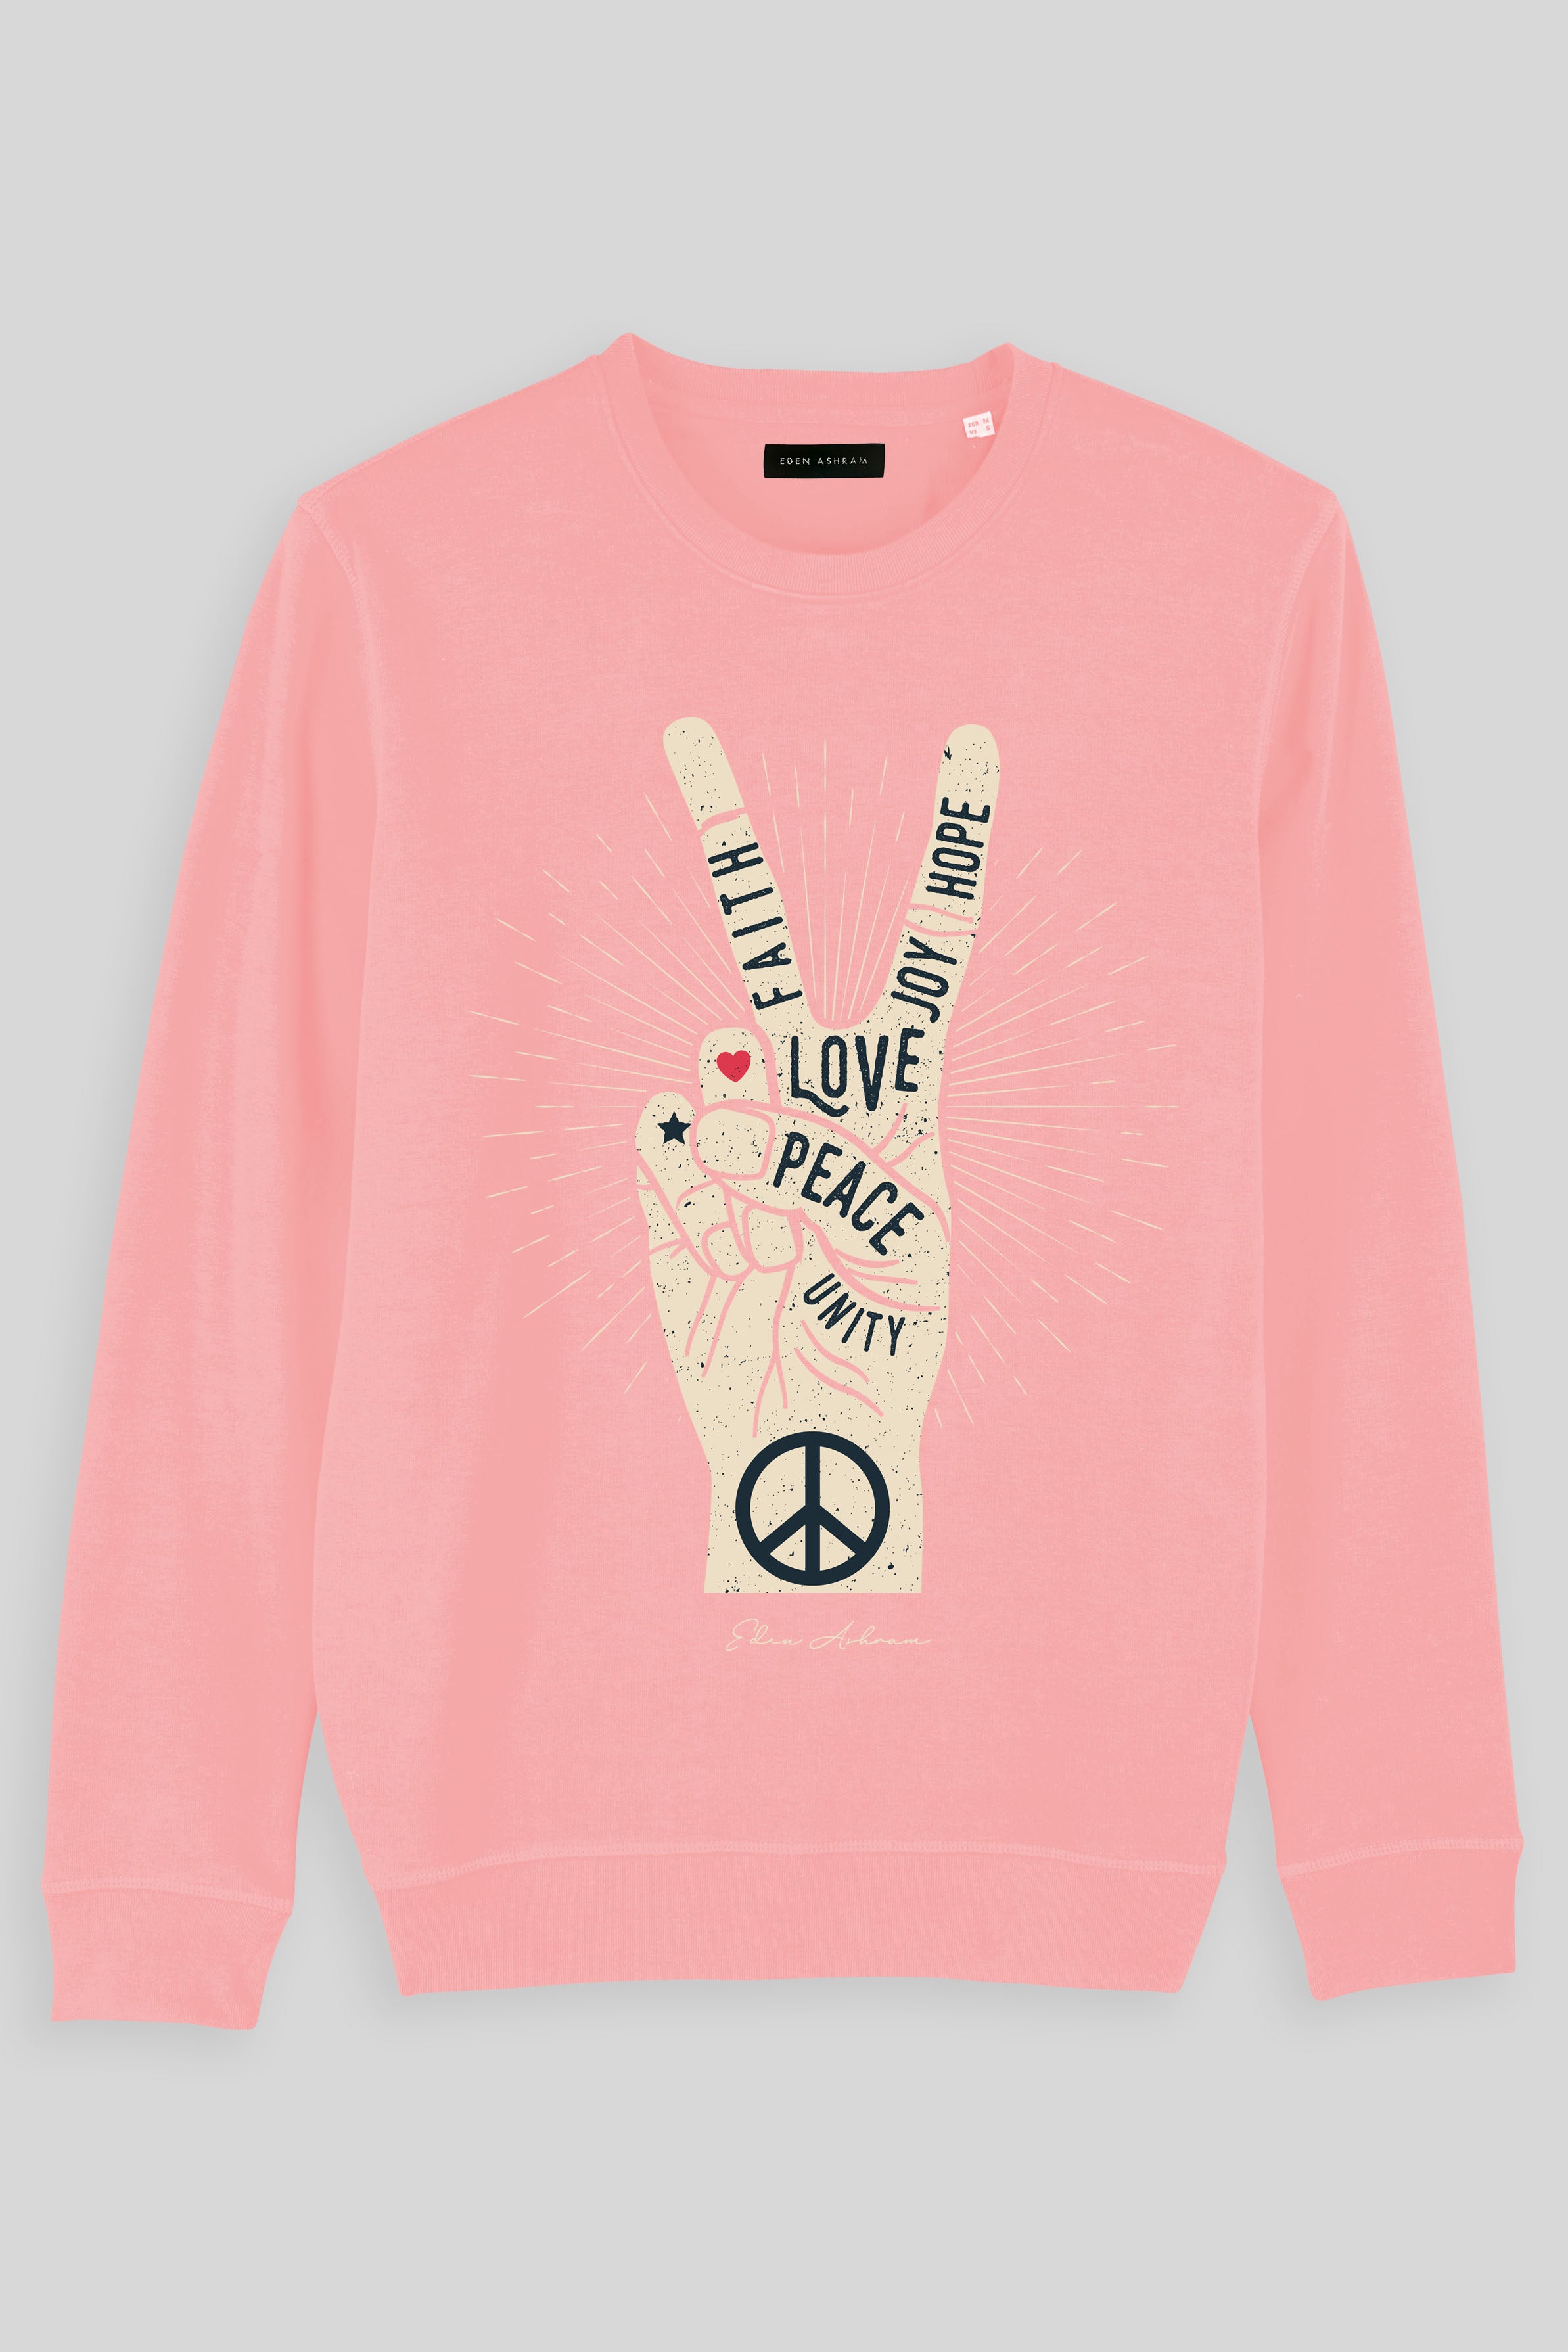 Eden Ashram Peace, Love, Unity, Faith, Joy & Hope Premium Crew Neck Sweatshirt Coral Pink